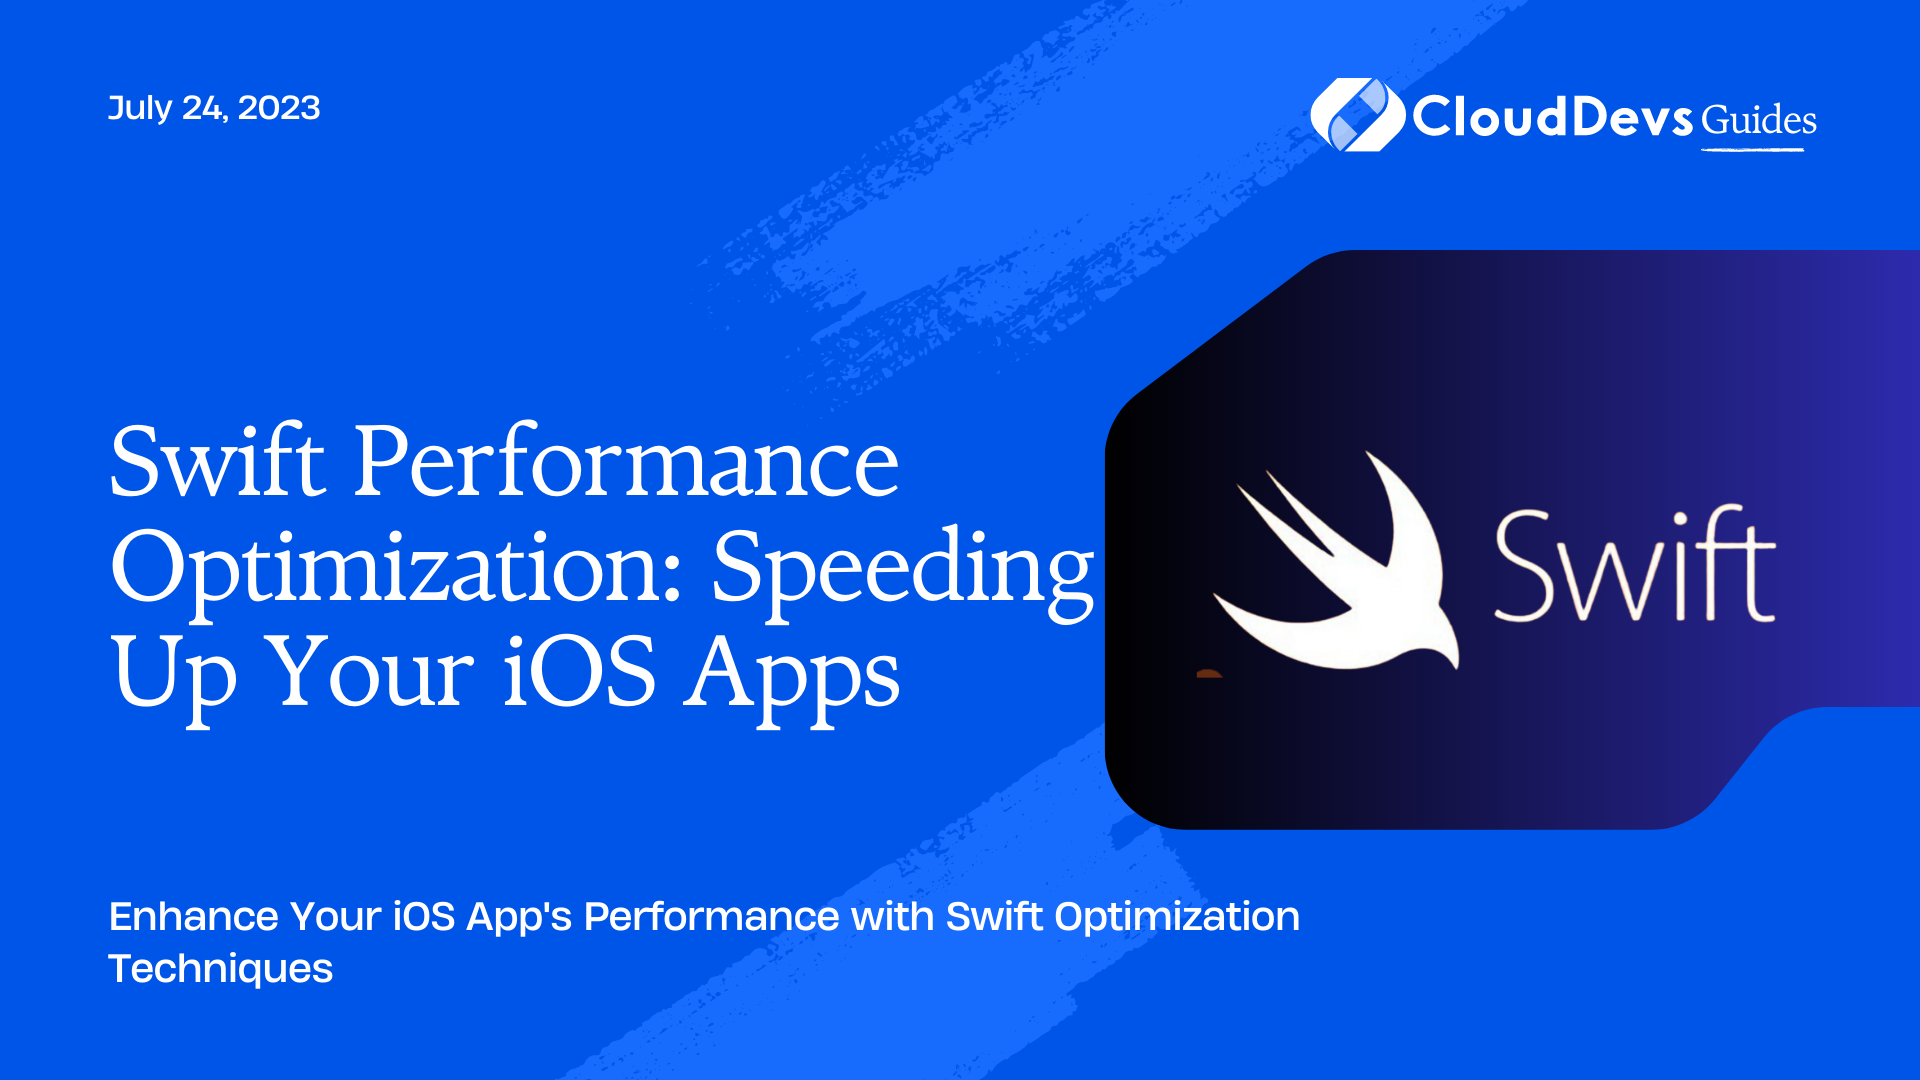 Swift Performance Optimization: Speeding Up Your iOS Apps